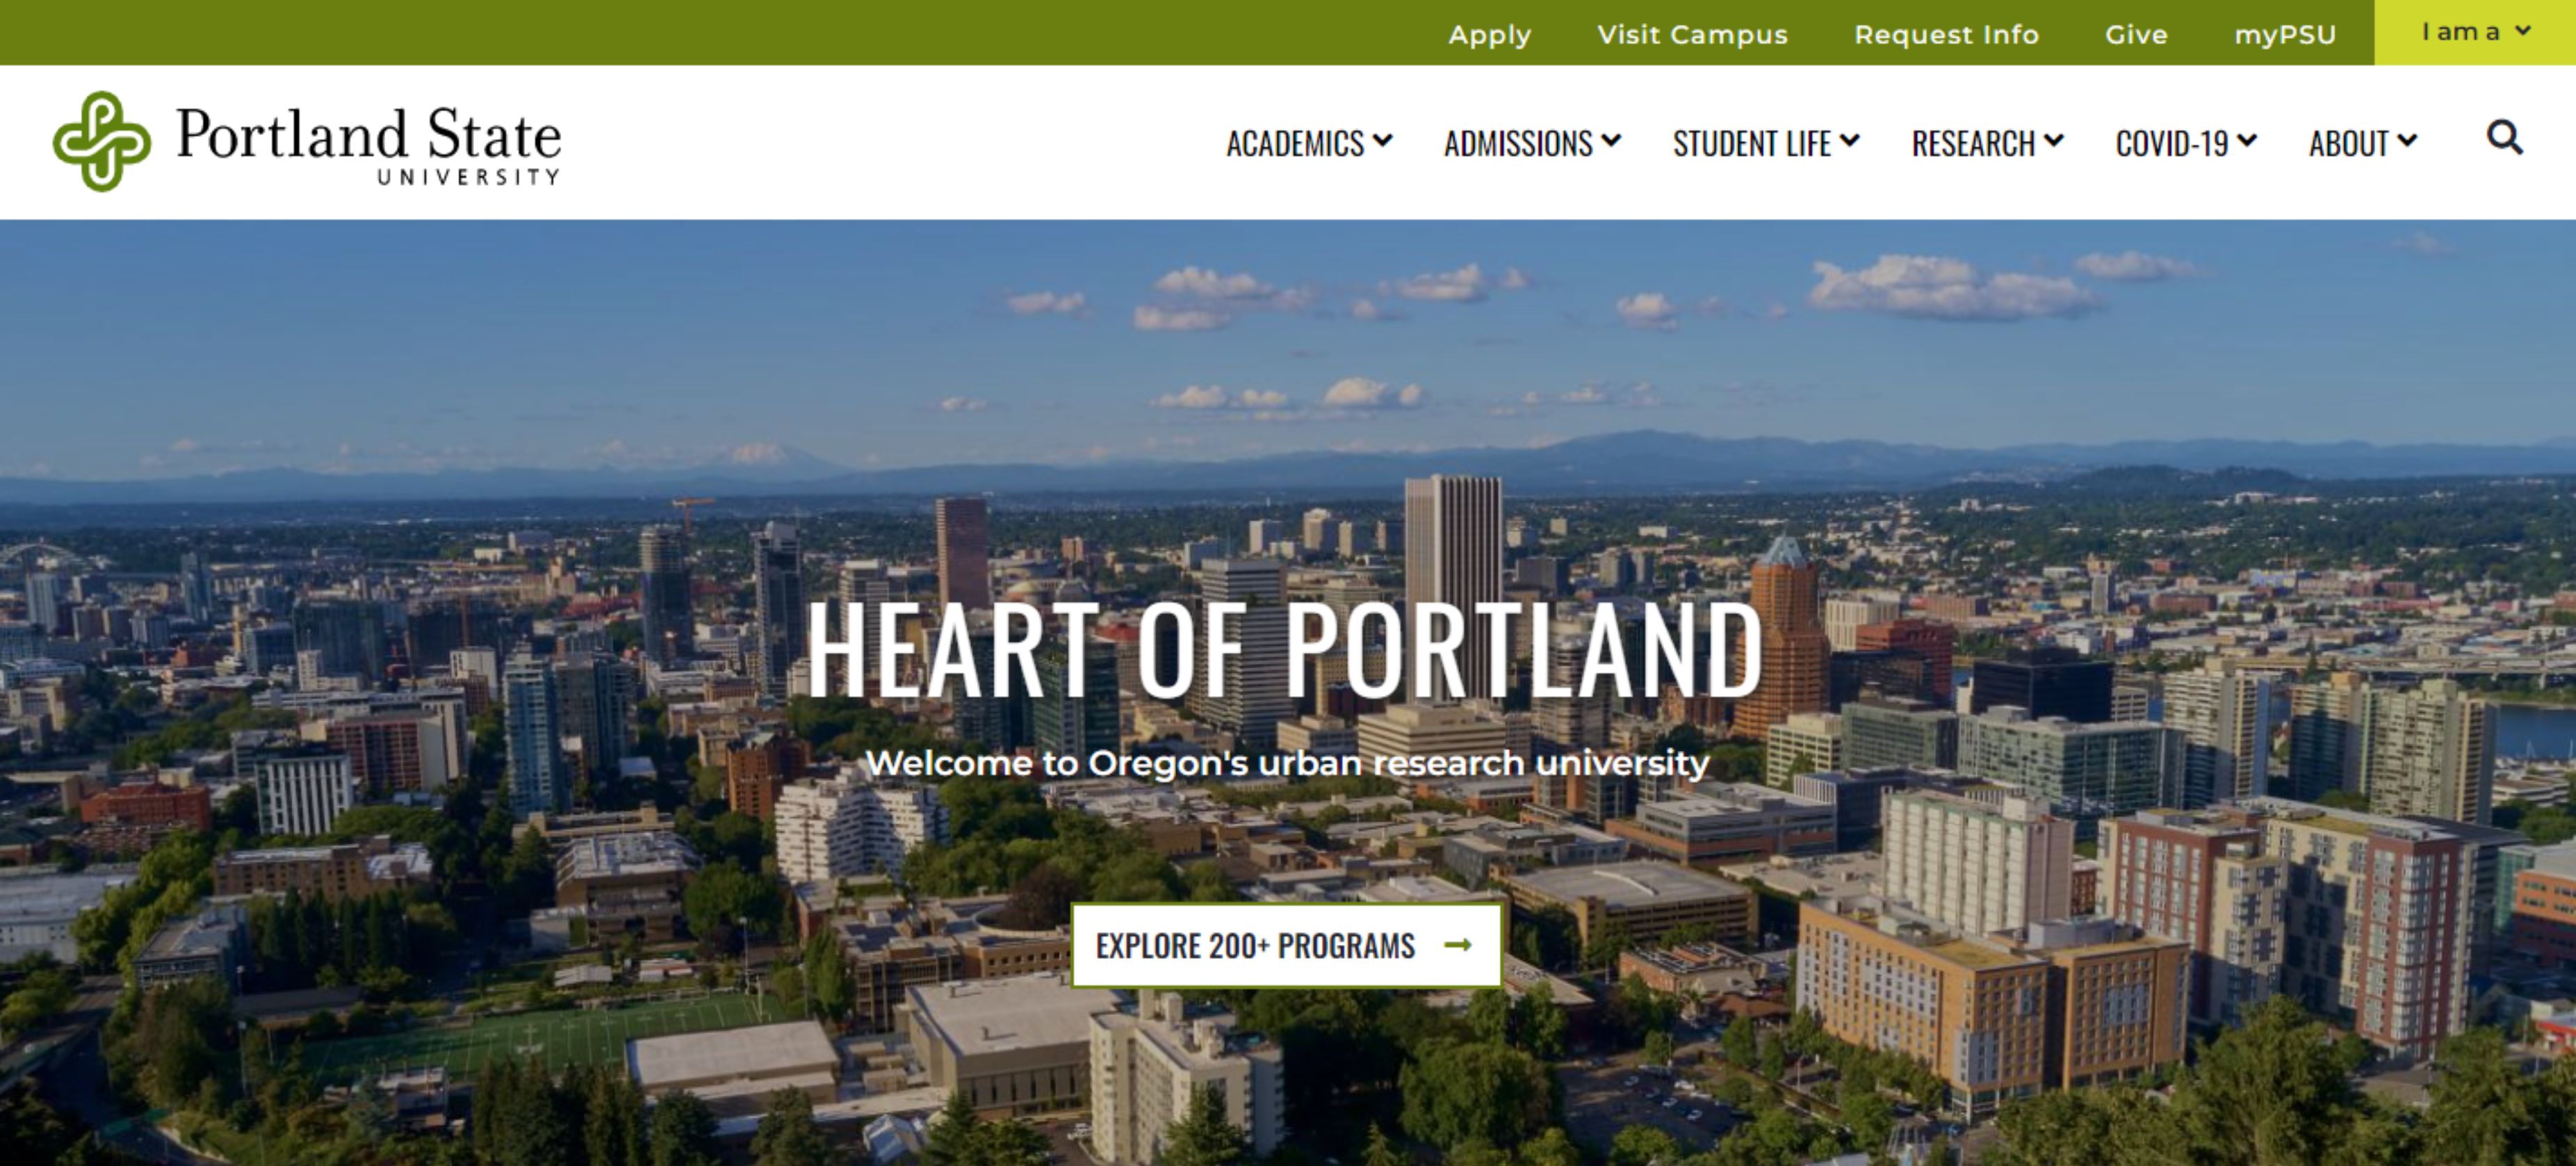 Portland State University homepage